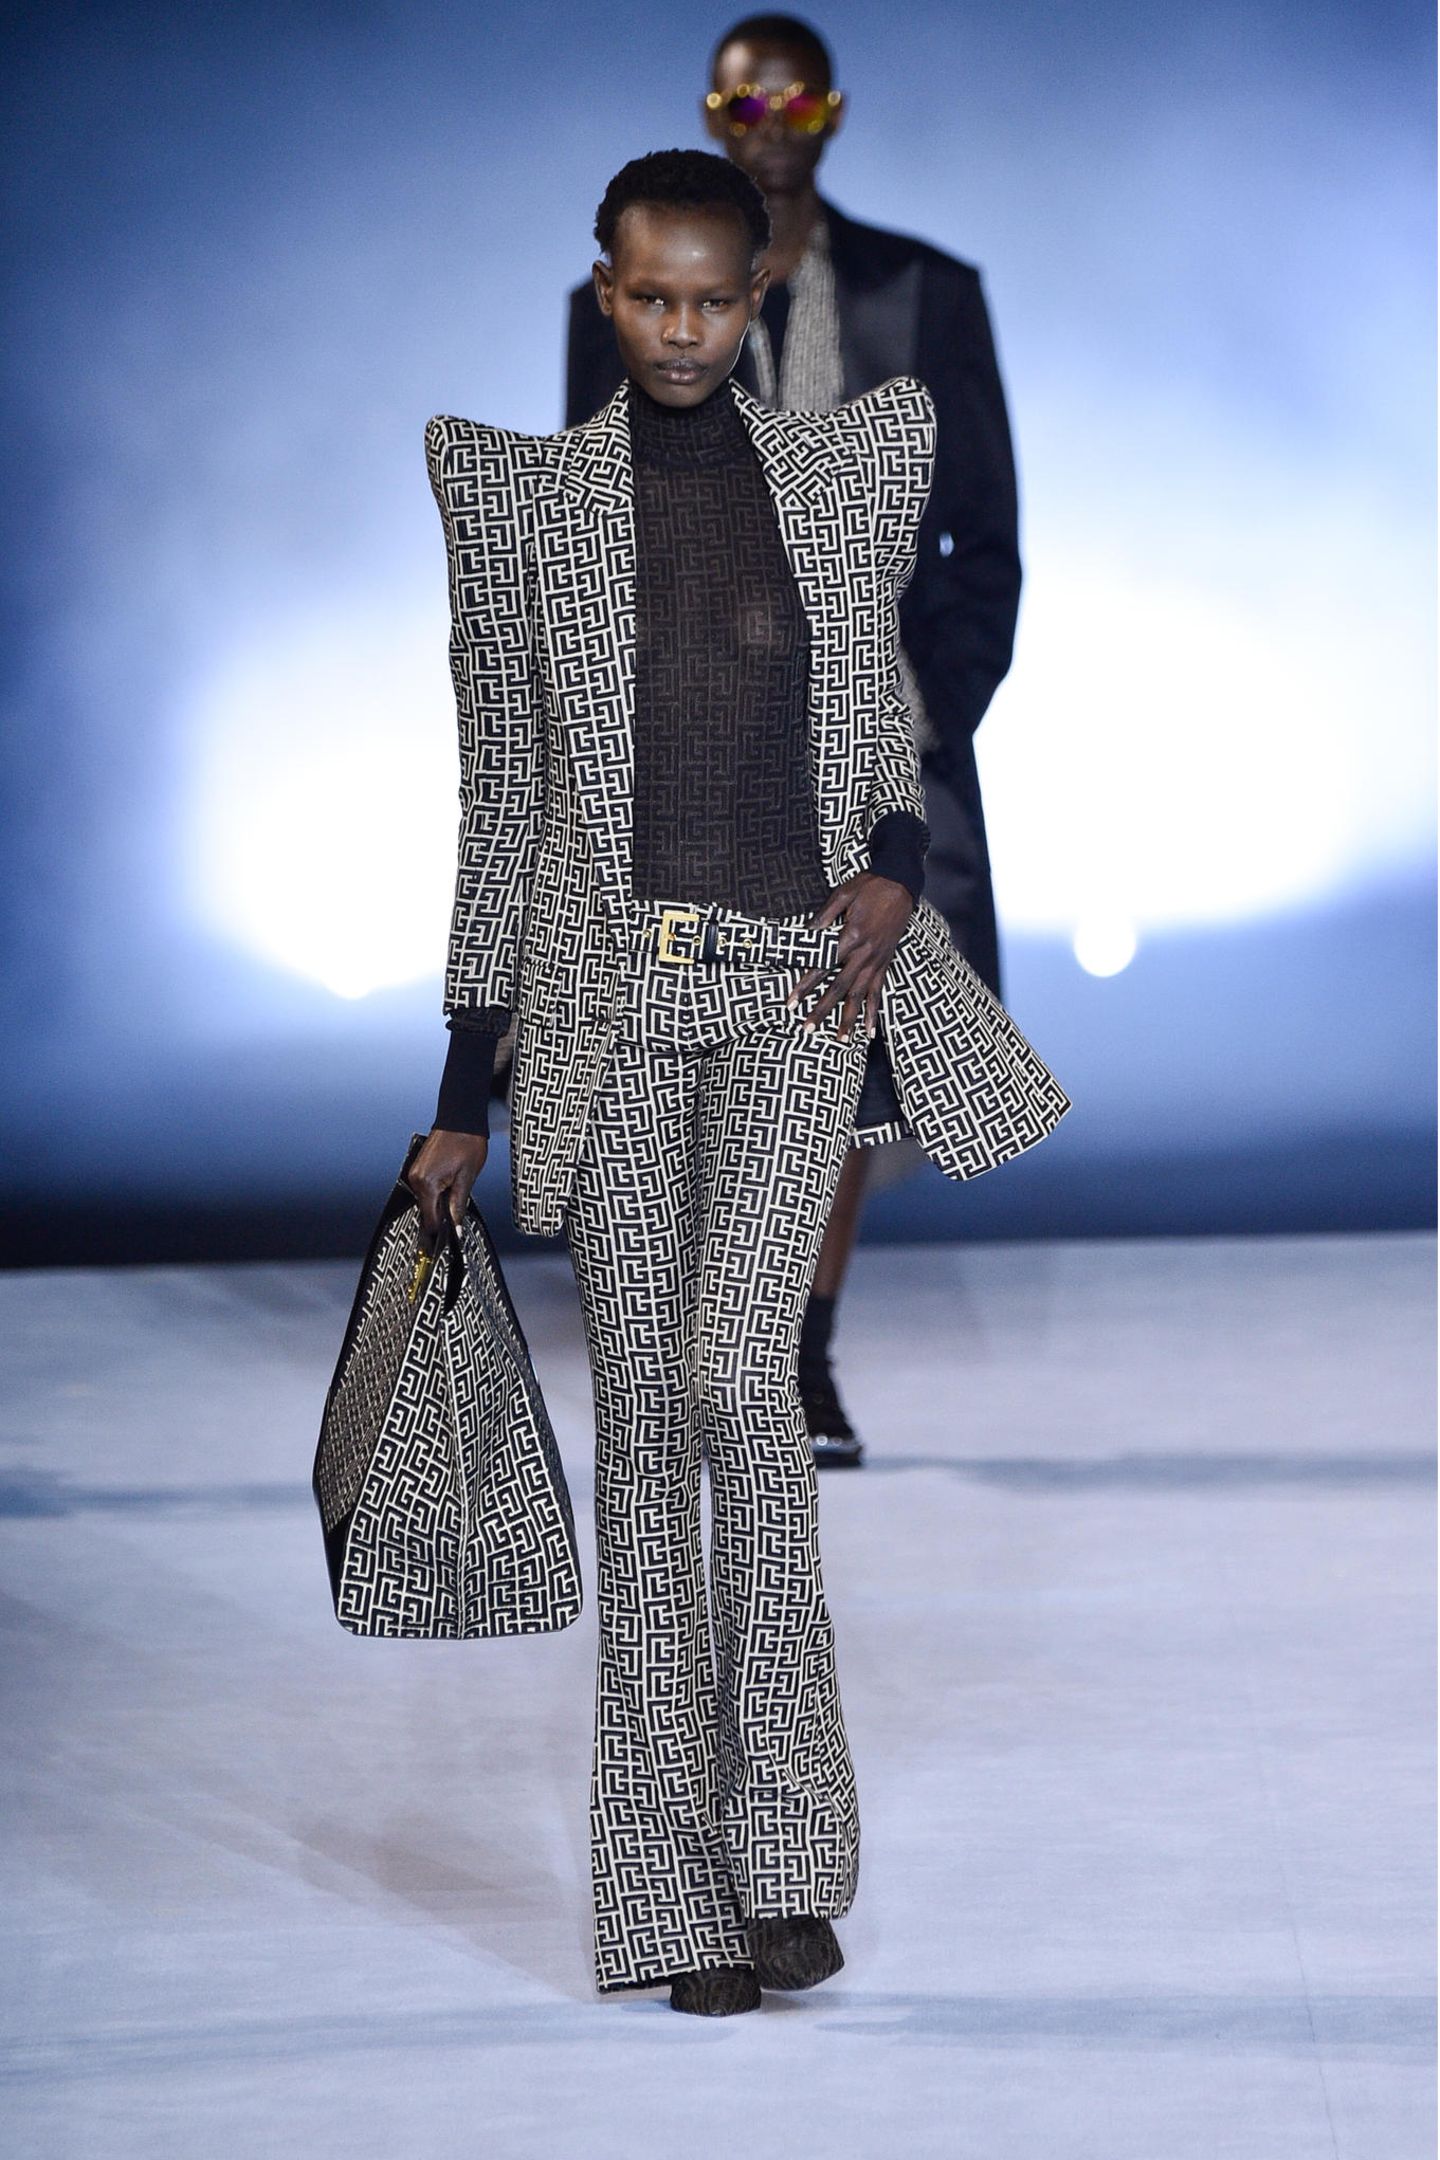 Georgina Rodriguez shows off her sensational style in a Louis Vuitton top  as she enjoys a desert day